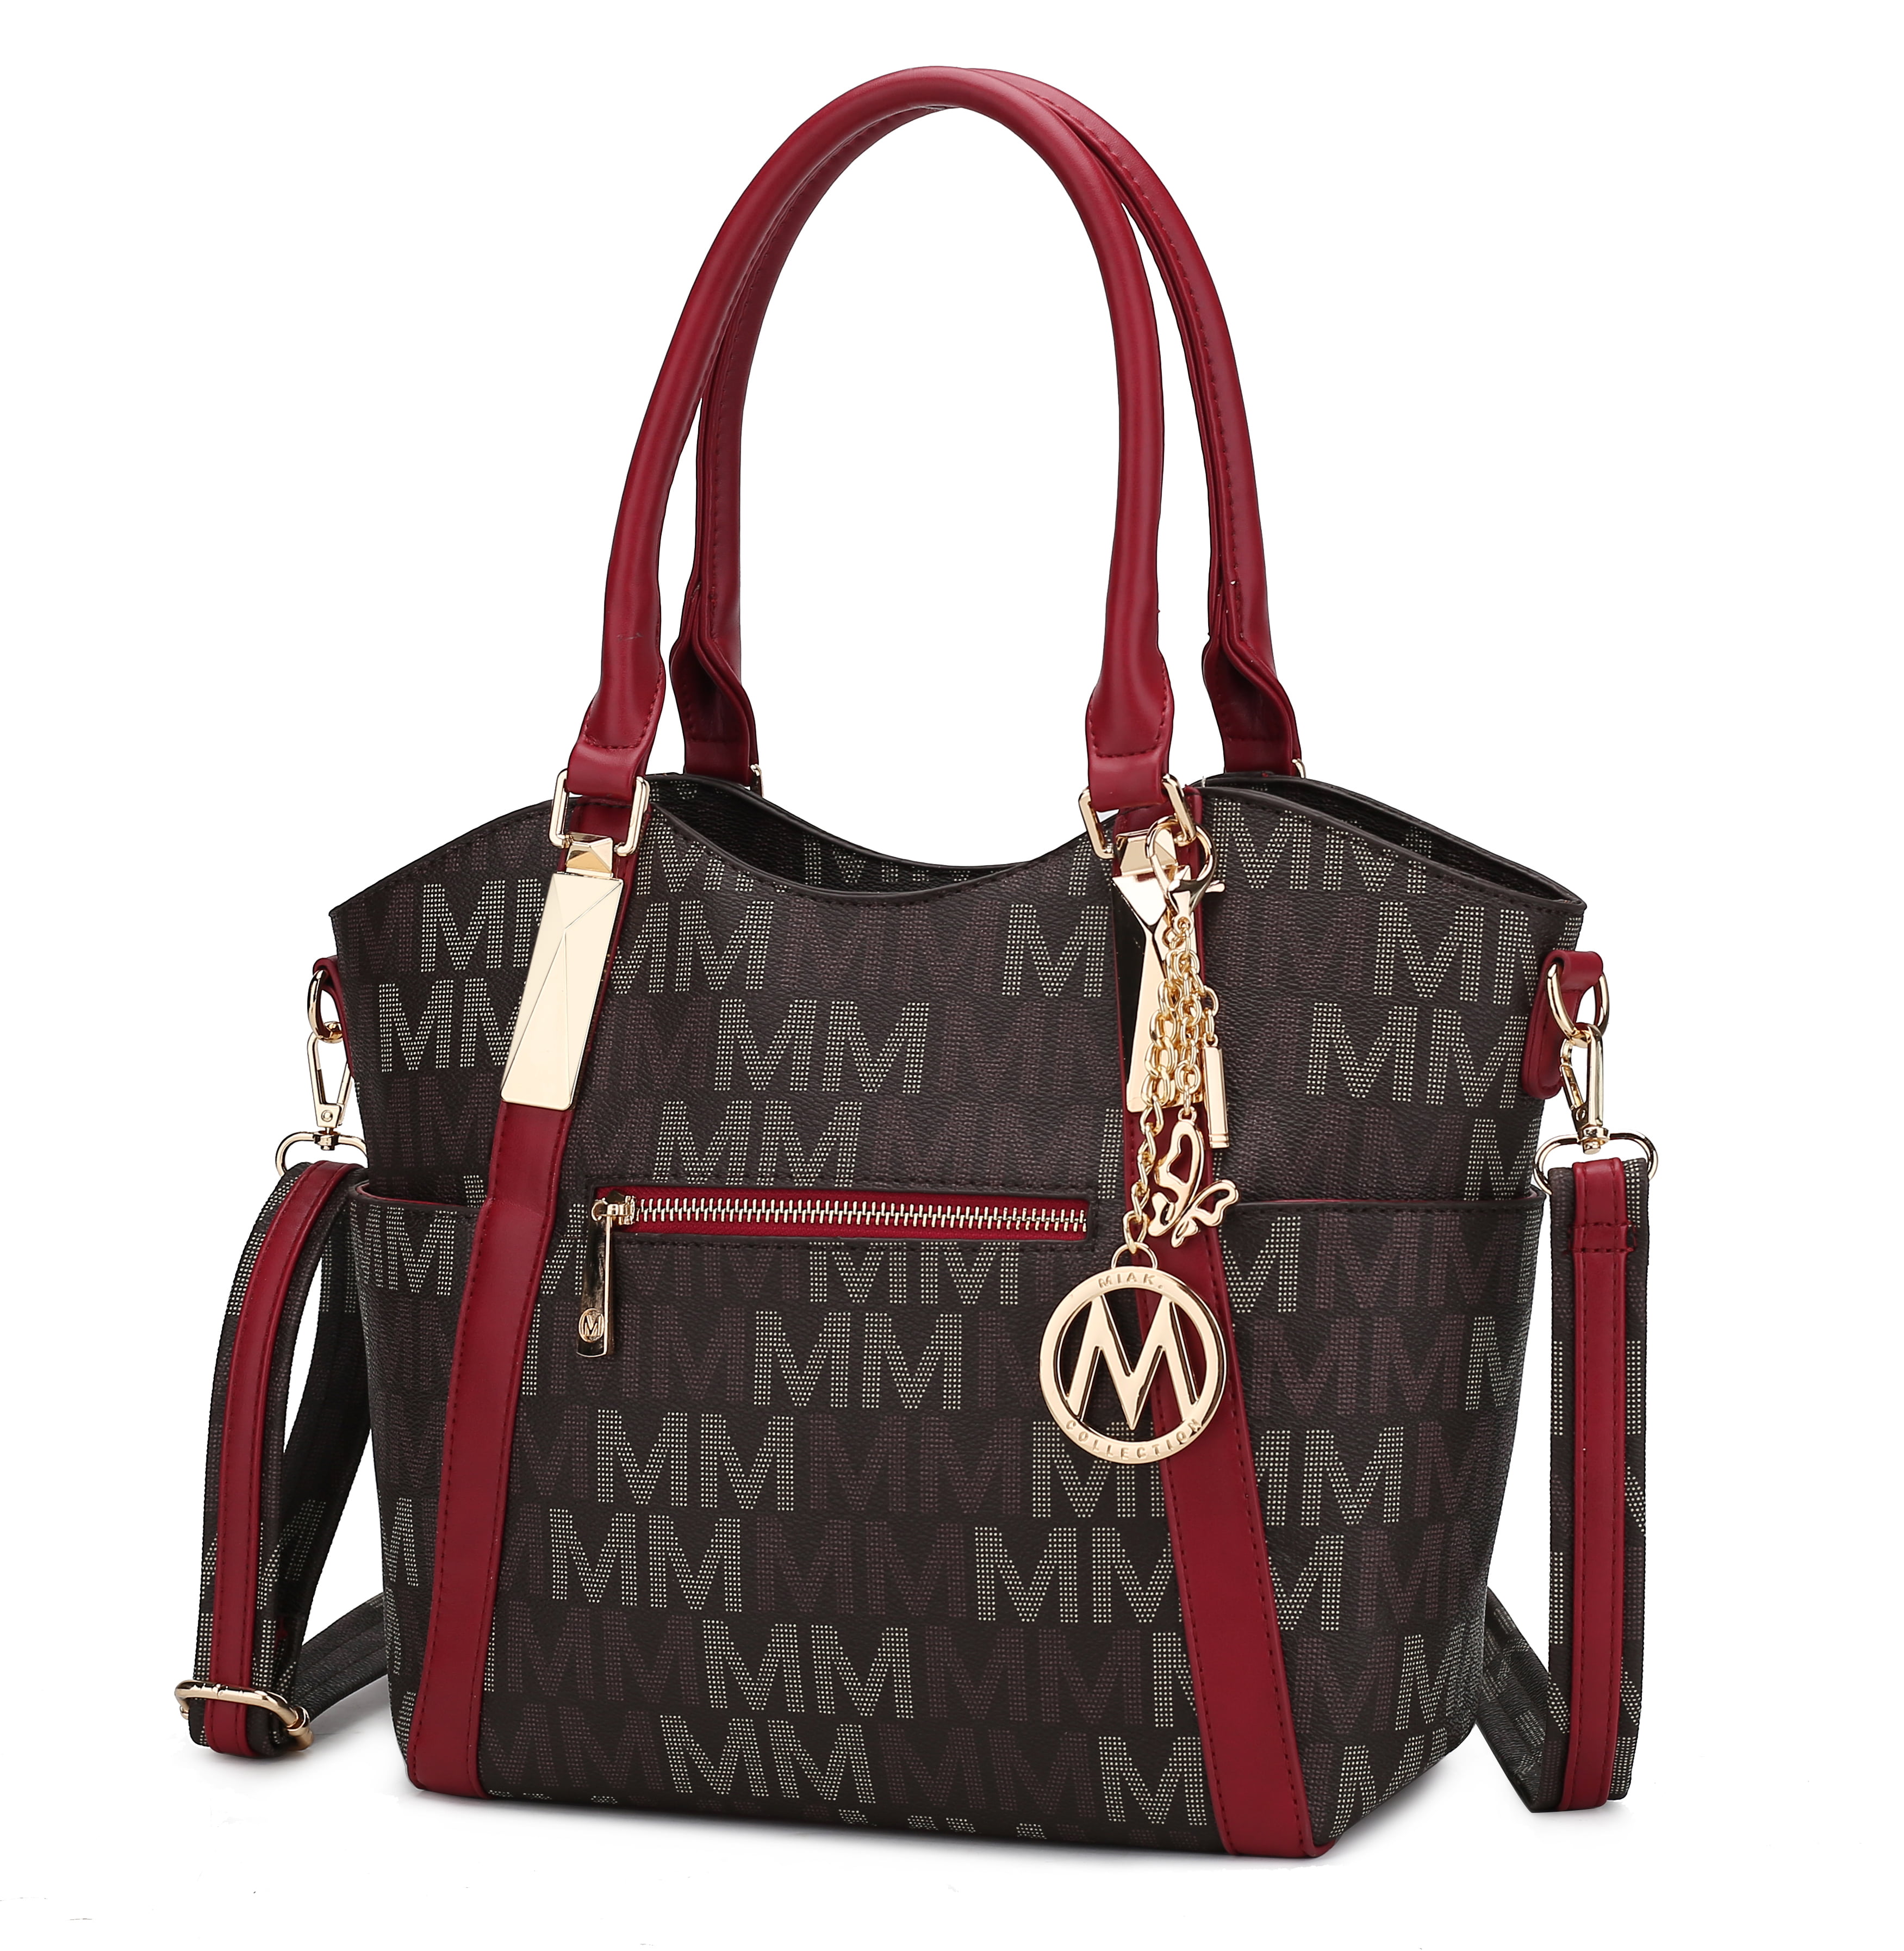 Top-Handle Purse Ladies Pocketbook PU Leather Shoulder Bag MKF Tote Satchel Handbag for Women 